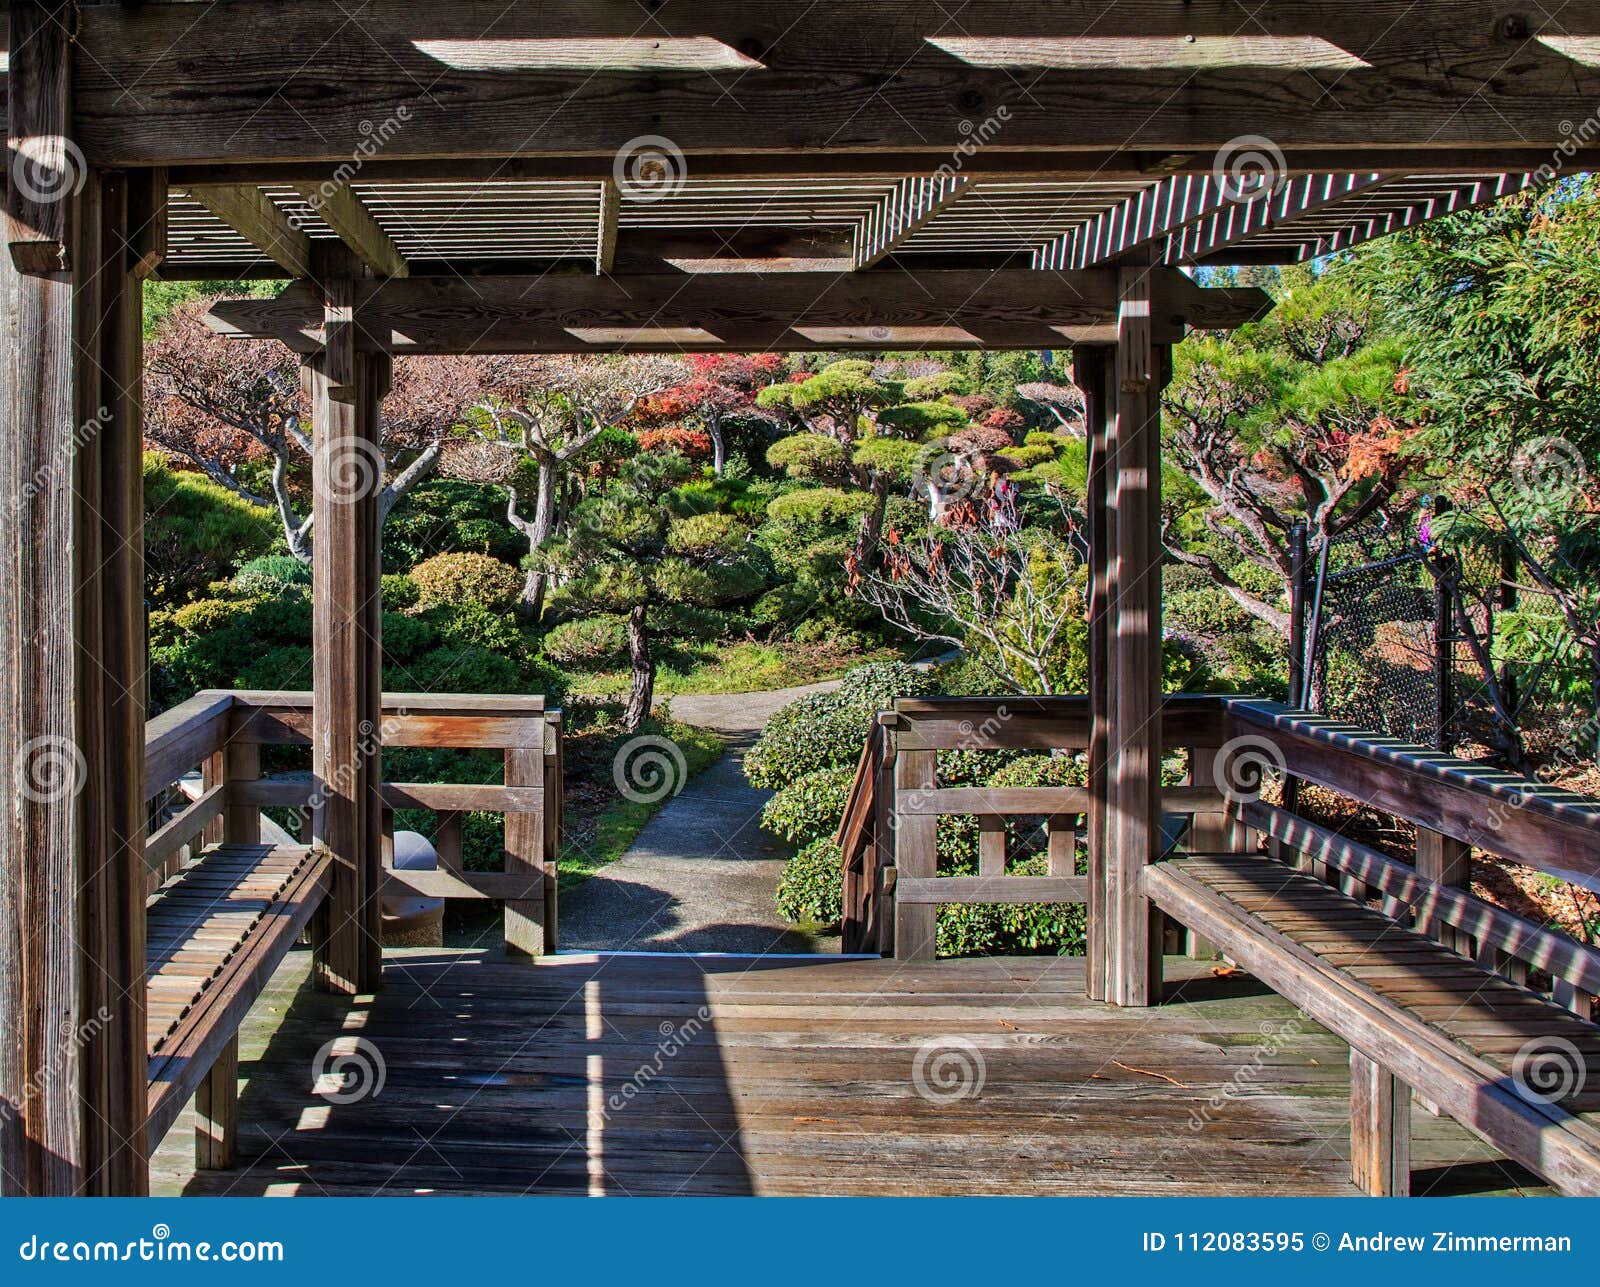 Japanese Garden Park Deck Area Stock Image - Image Of Green Hayward 112083595